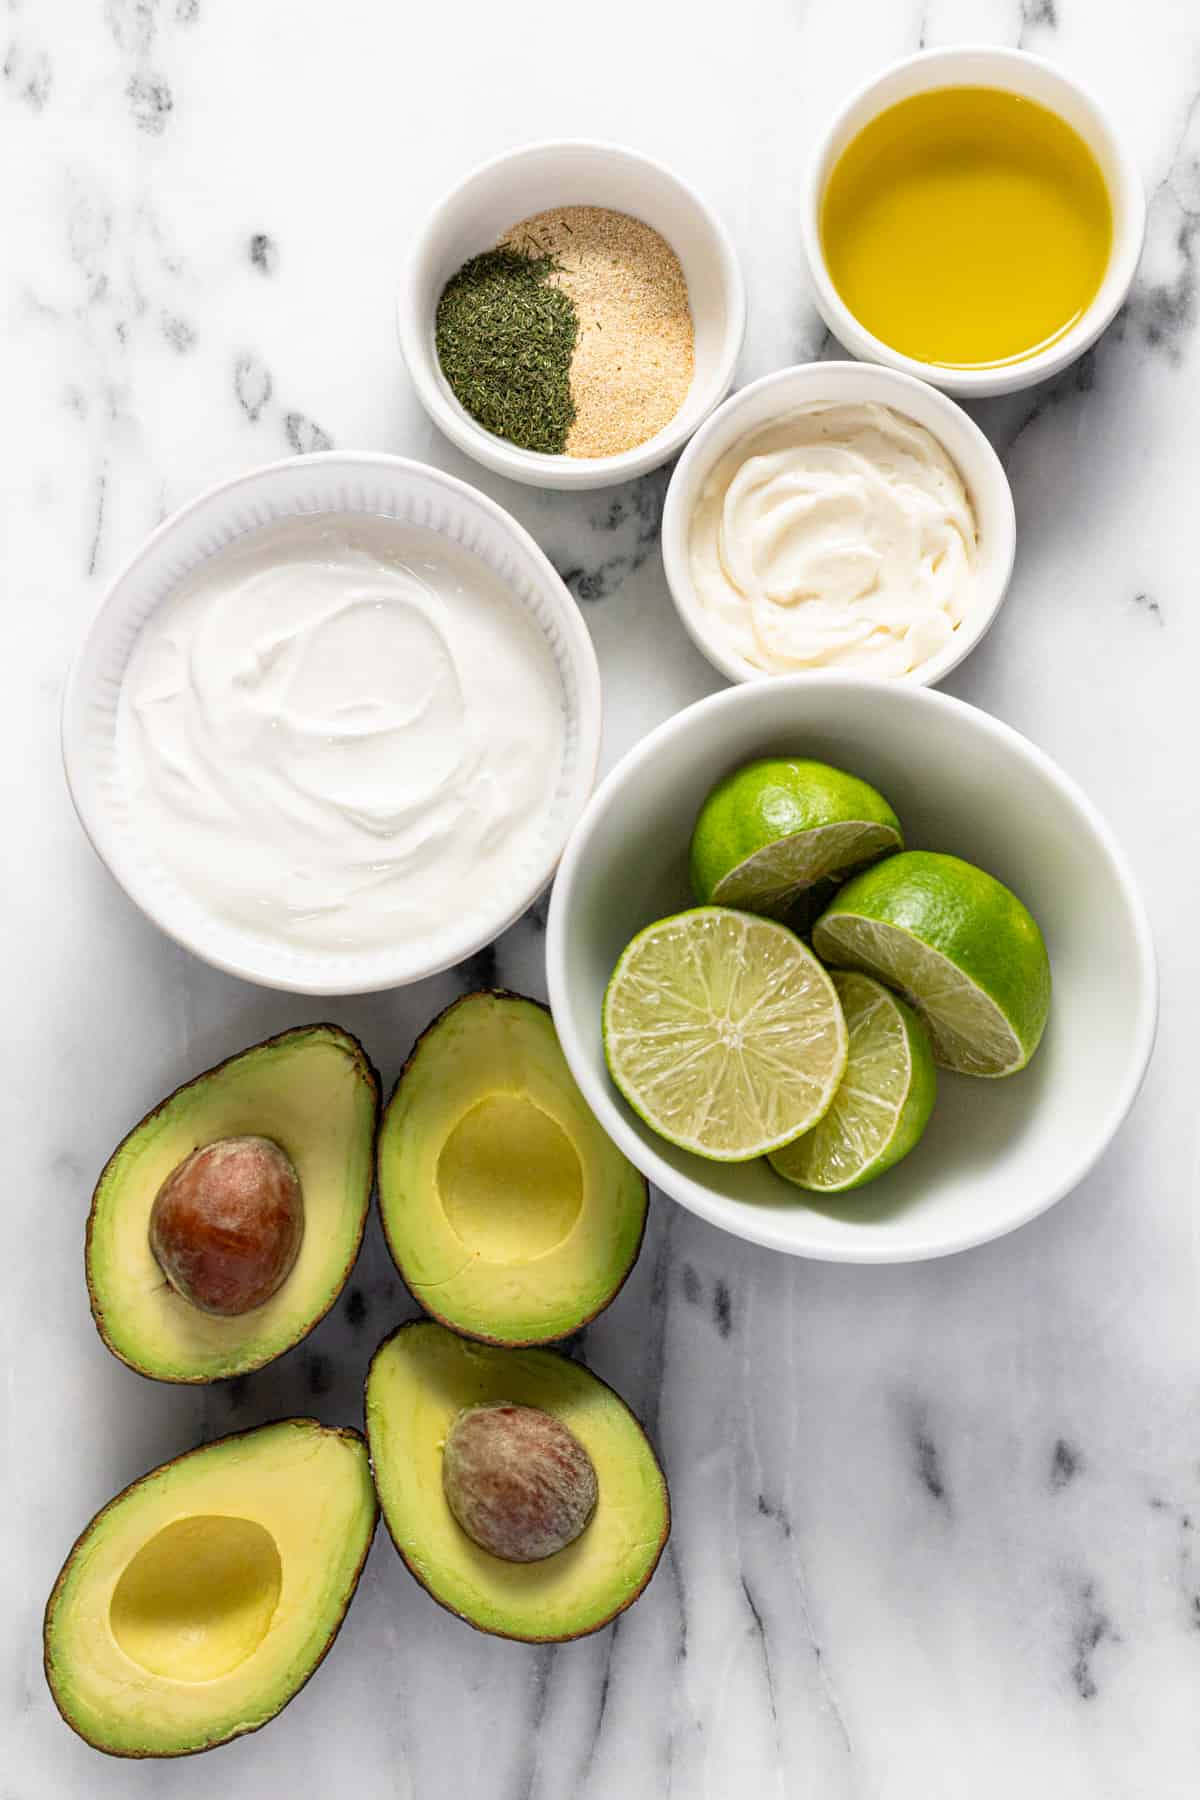 Bowls of ingredients to make creamy avocado salad dressing.